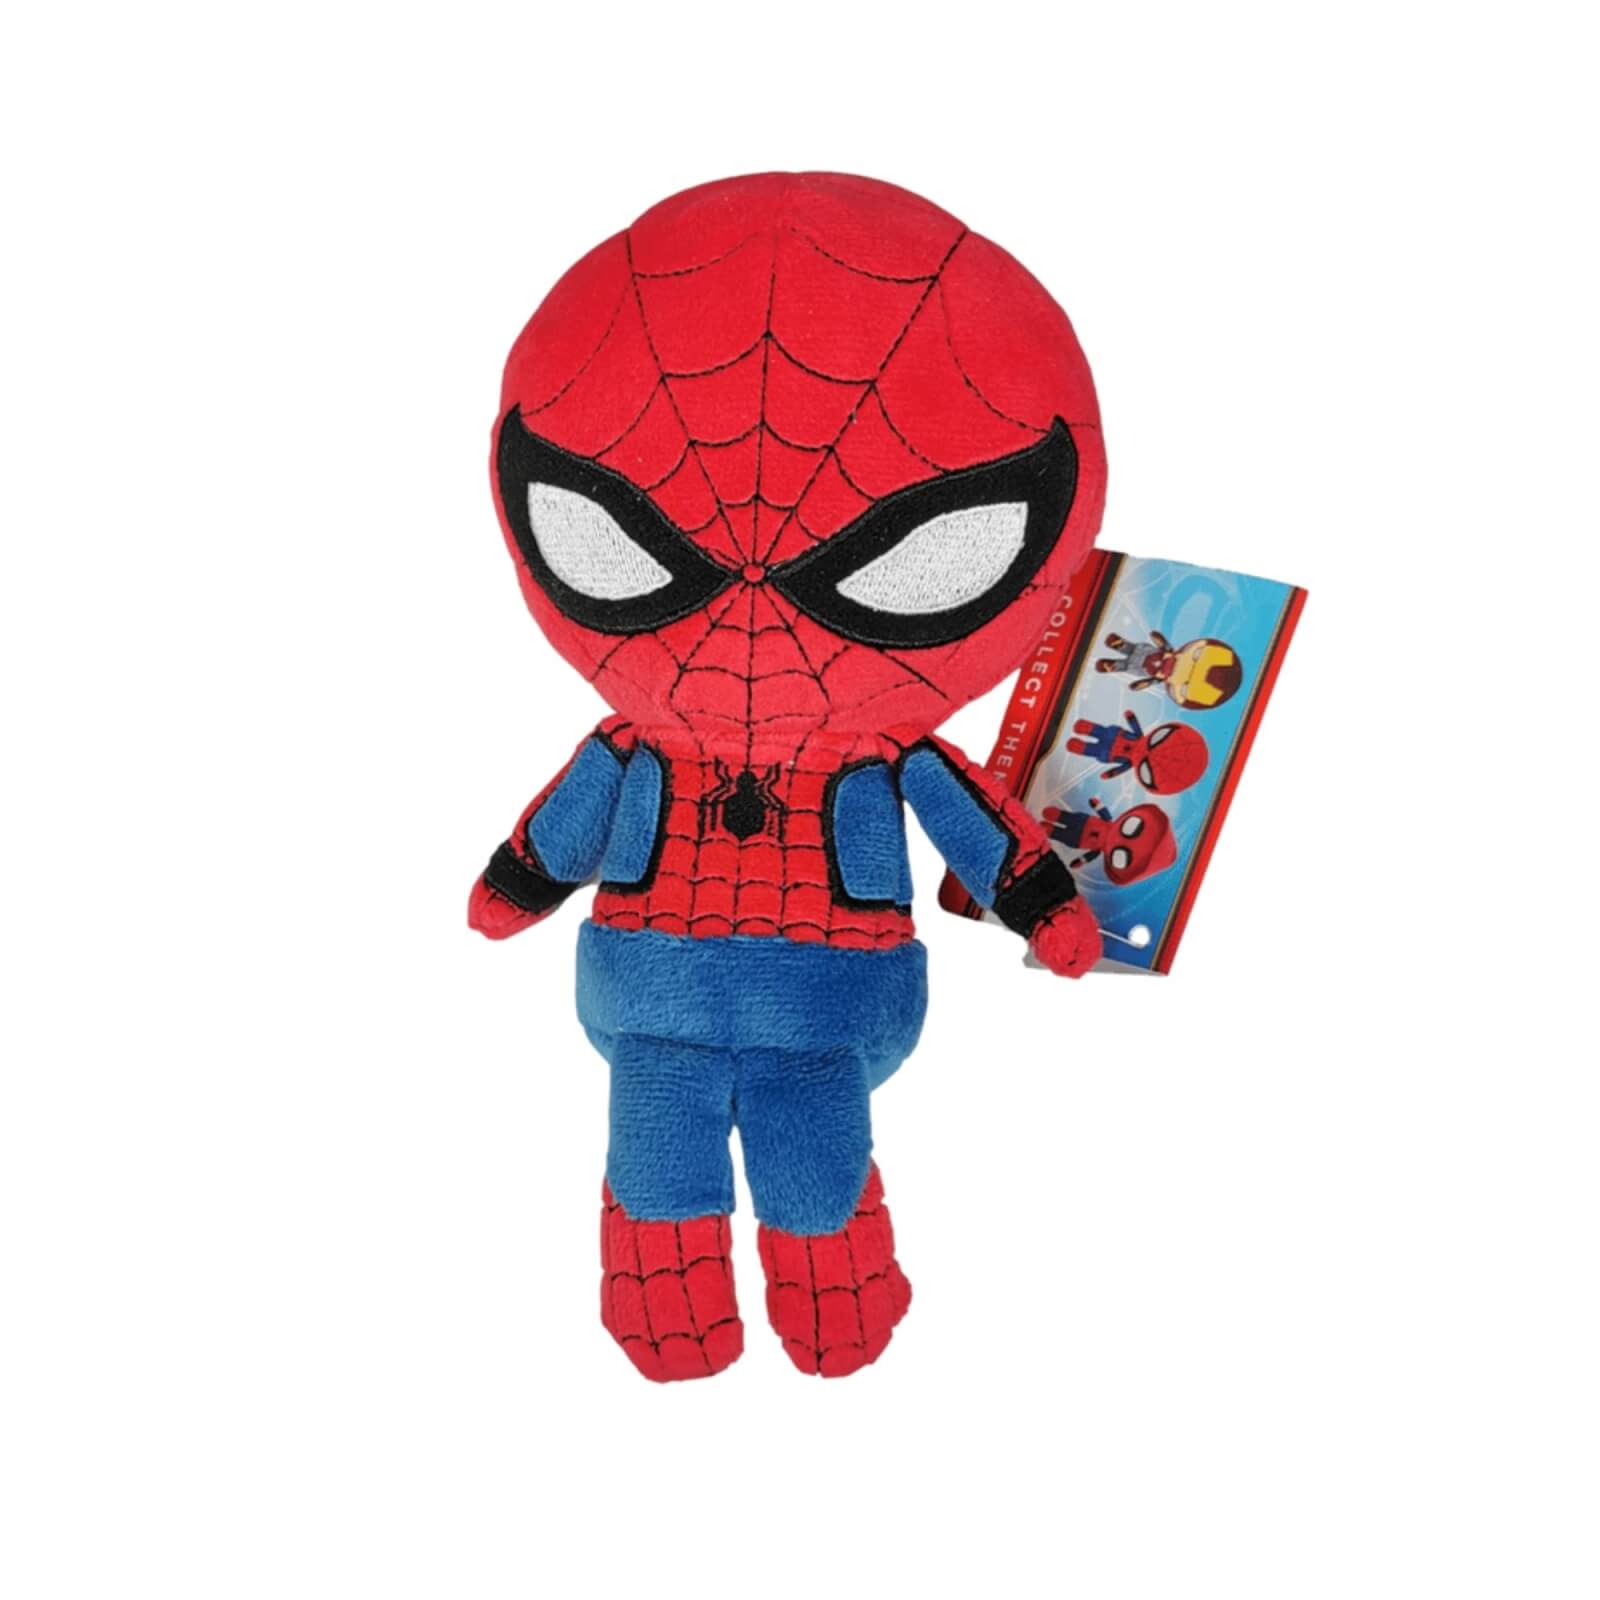 Spider-Man Homecoming Spider-Man Funko Pop! Plush